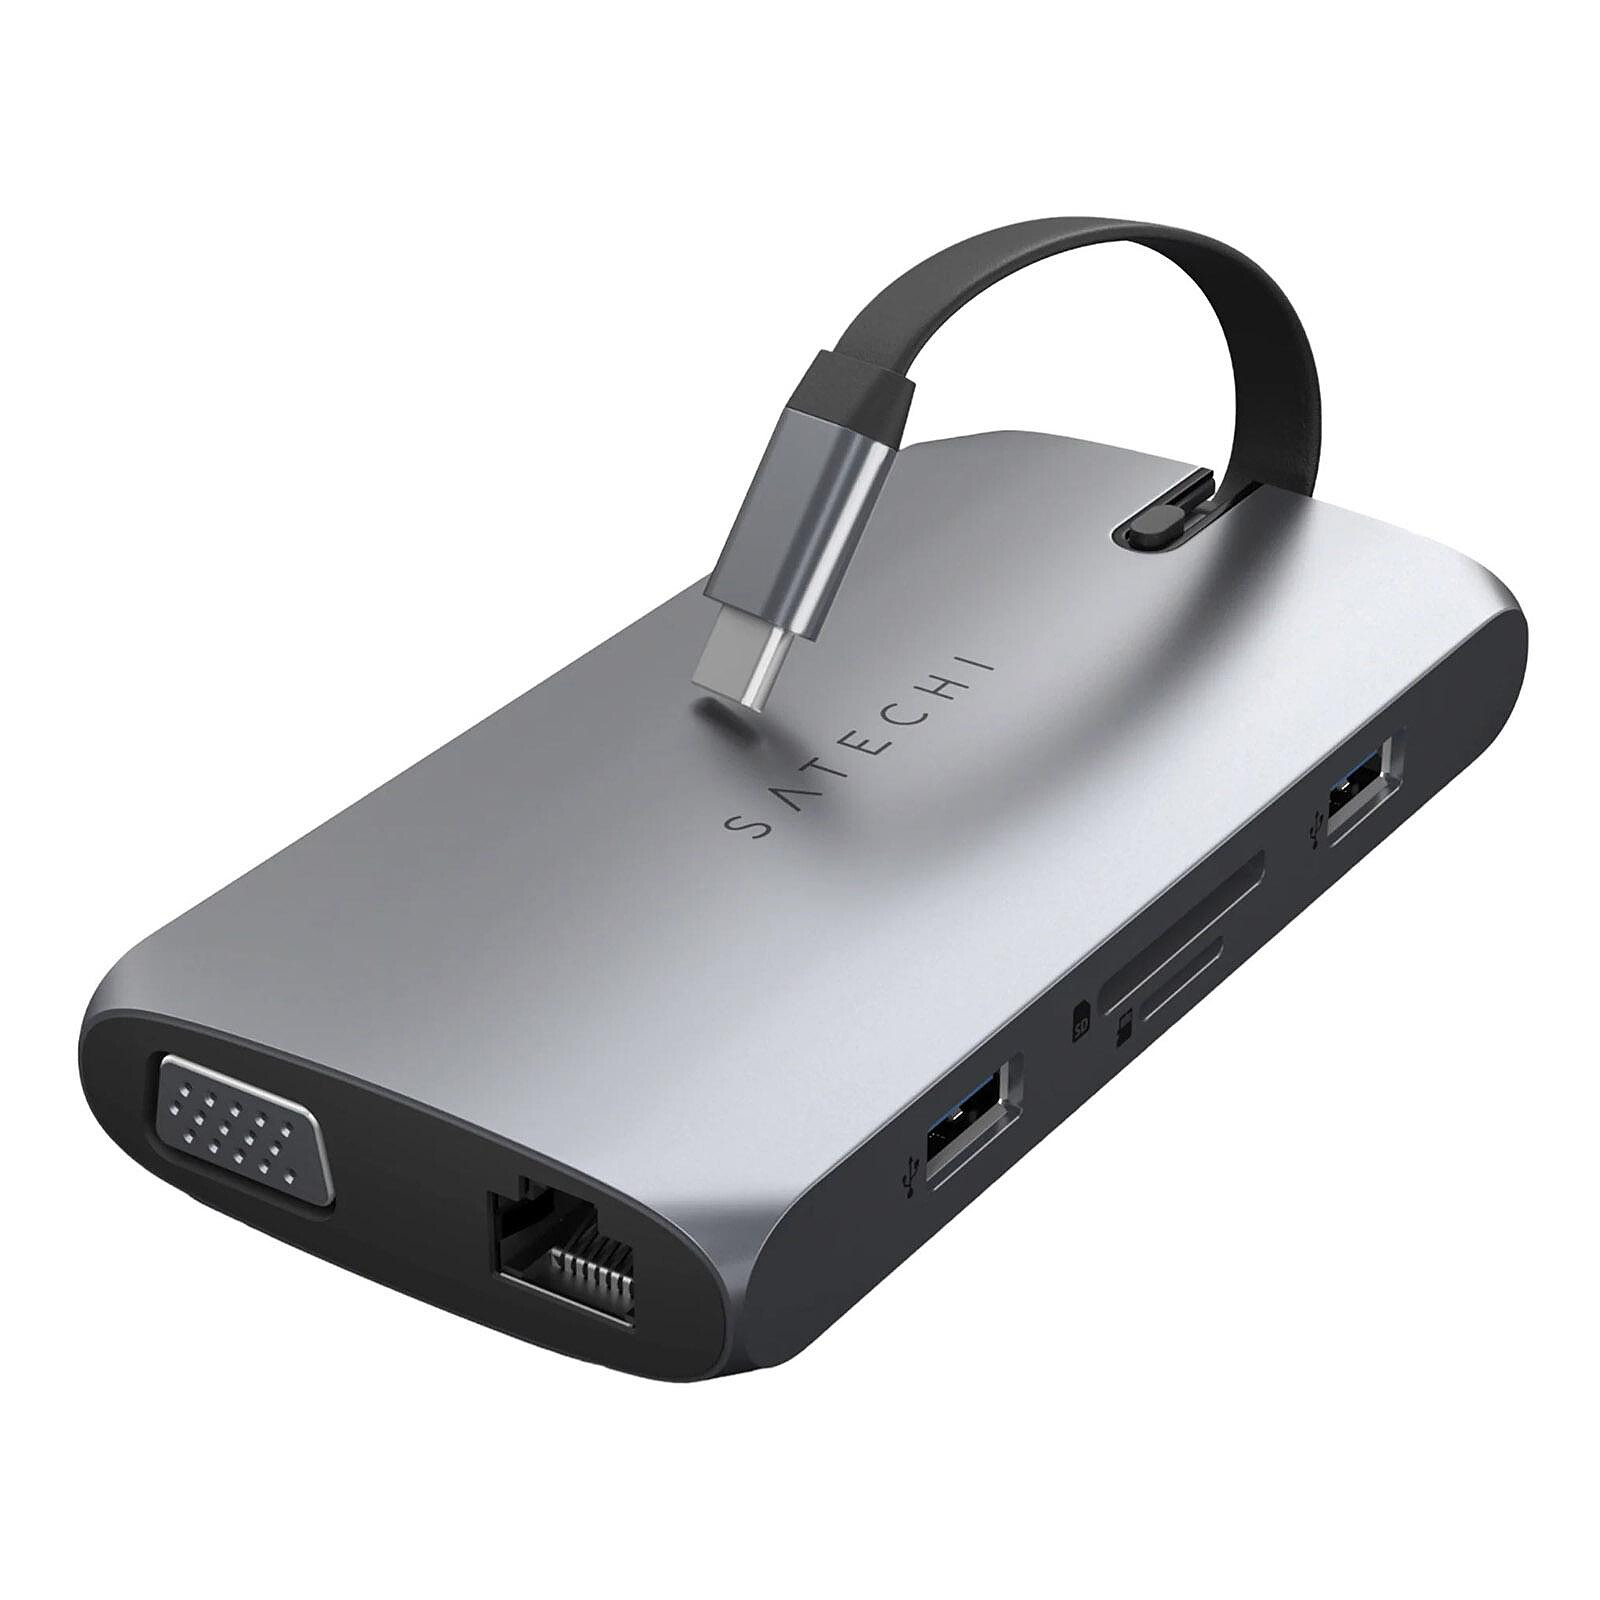 Hub MacBook double USB C vers HDMI 4K, Ethernet, 2 USB + USB C